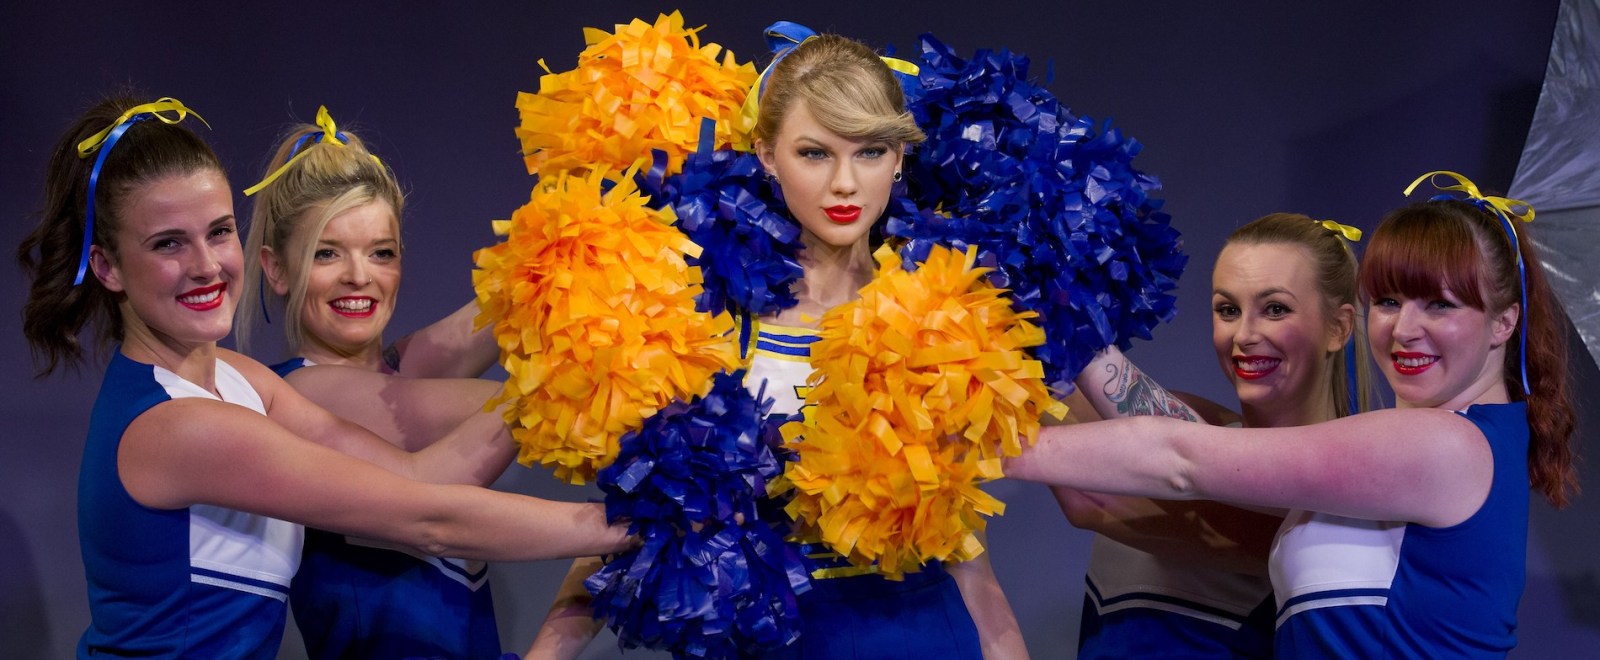 Taylor Swift Wax Figure Madame Tussauds London 2015